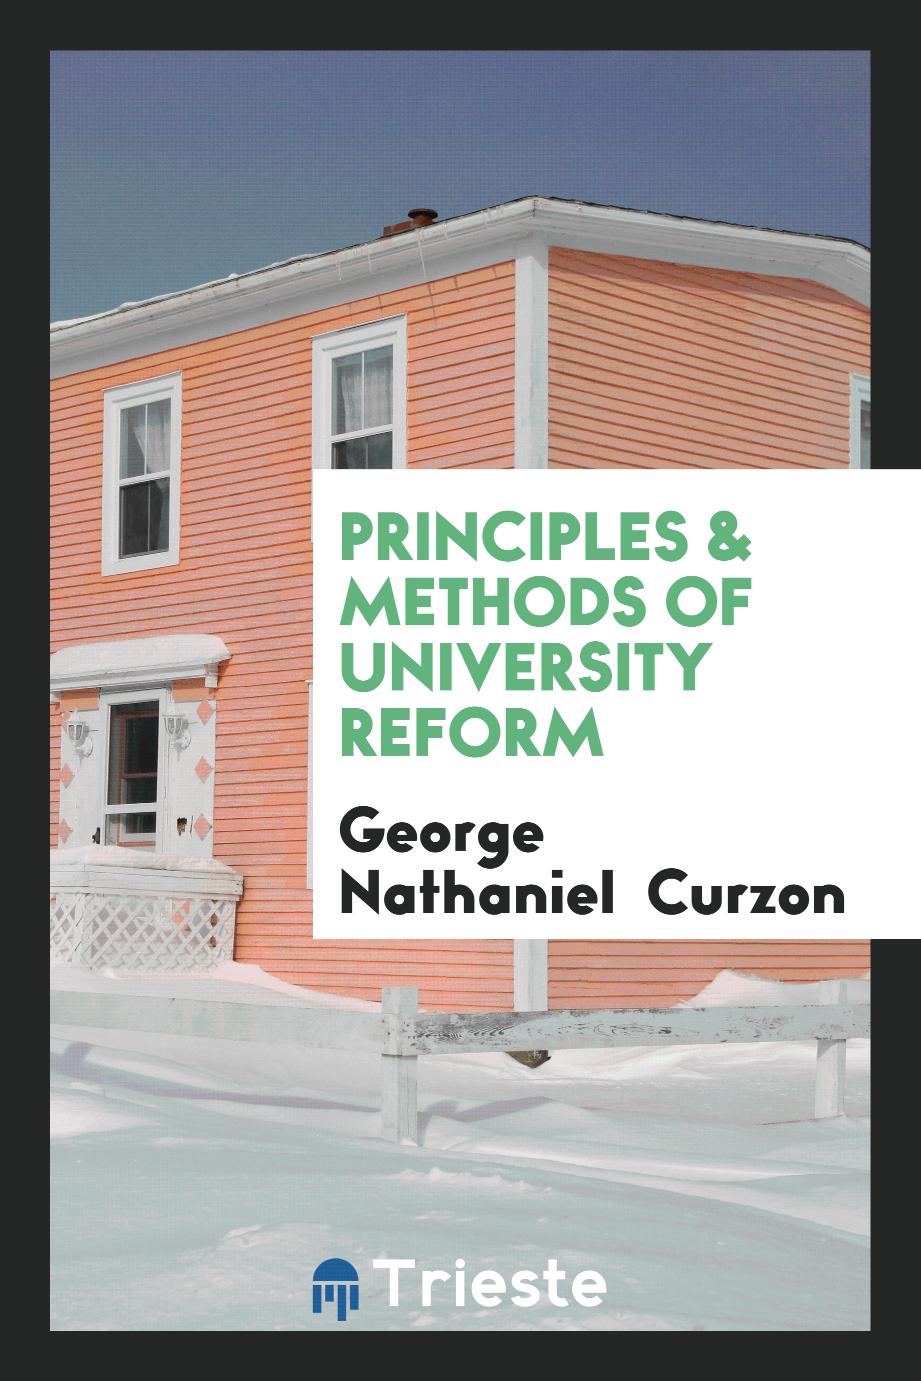 Principles & methods of university reform